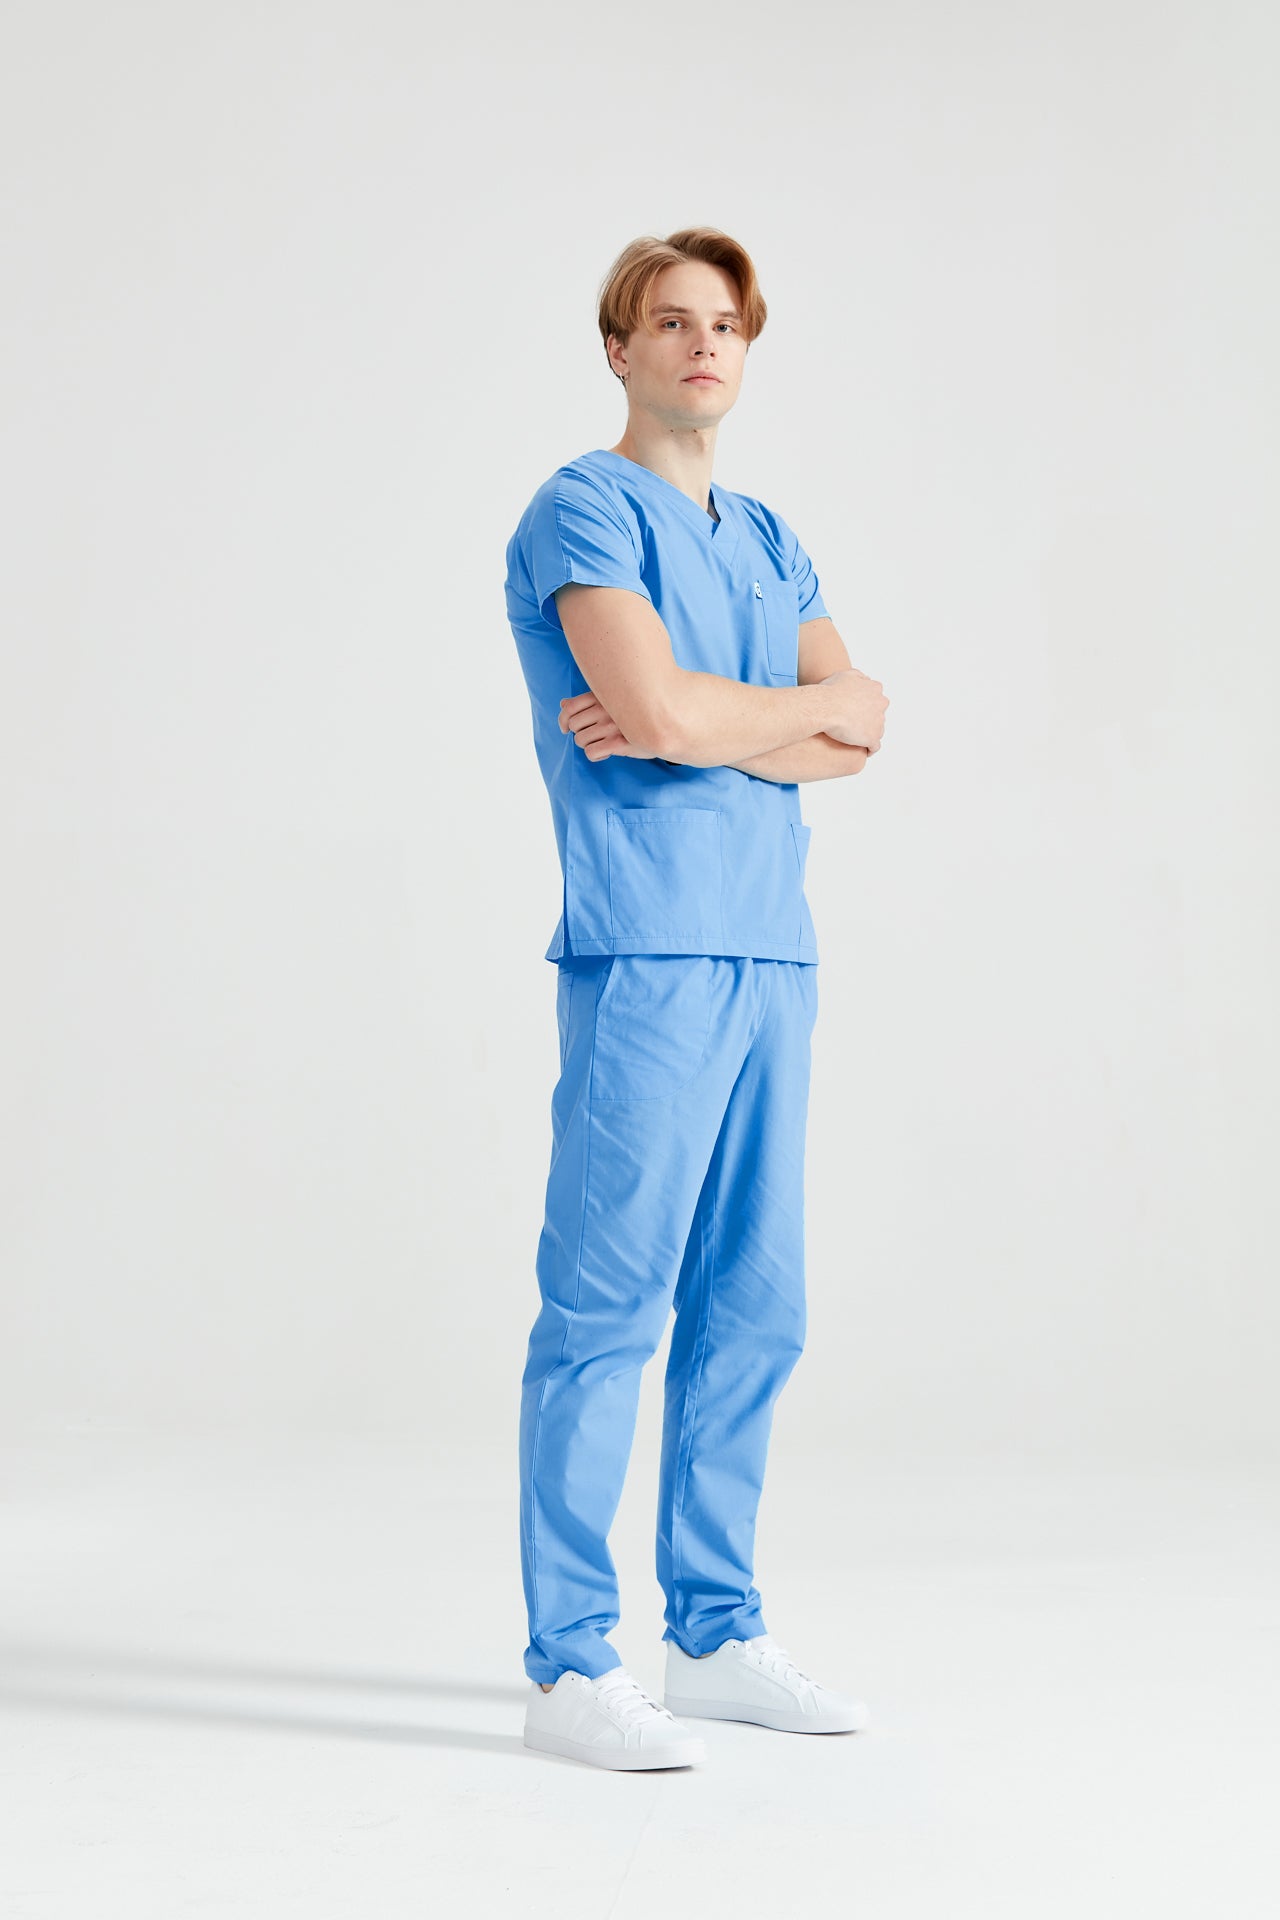 Asistent medical imbracat in costum medical barbati, elastan, albastru parlament, vedere din profil